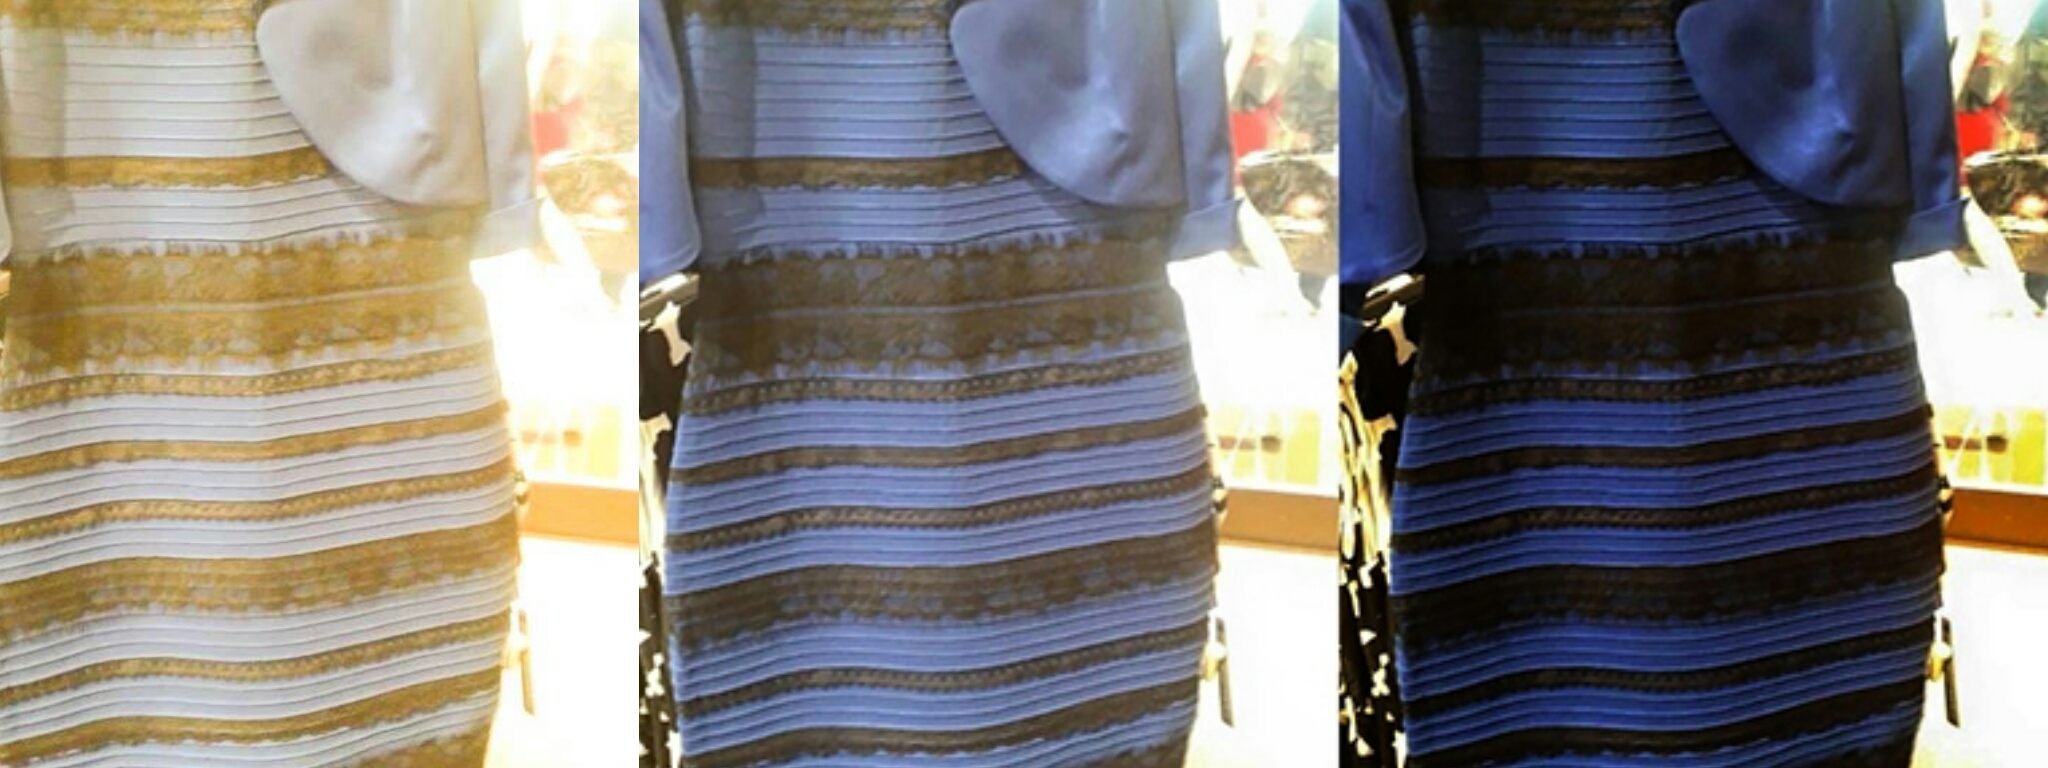 обман зрения картинки платье